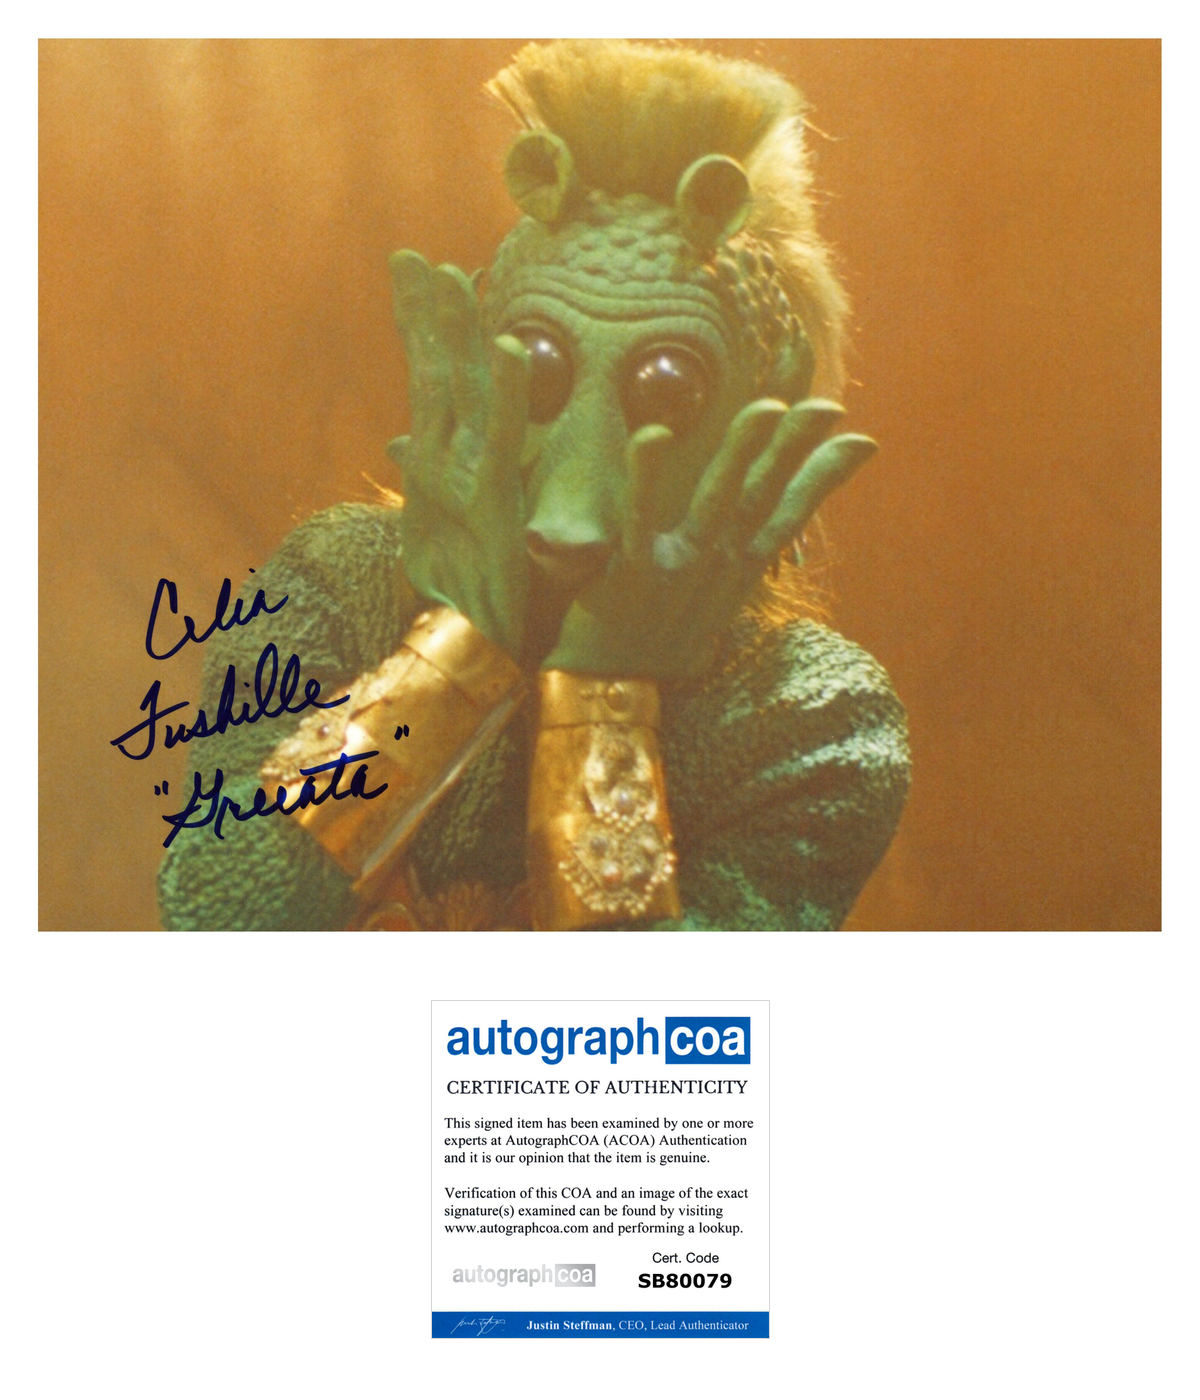 Celia Fushille-Burke Signed 8x10 Photo Star Wars Autographed ACOA